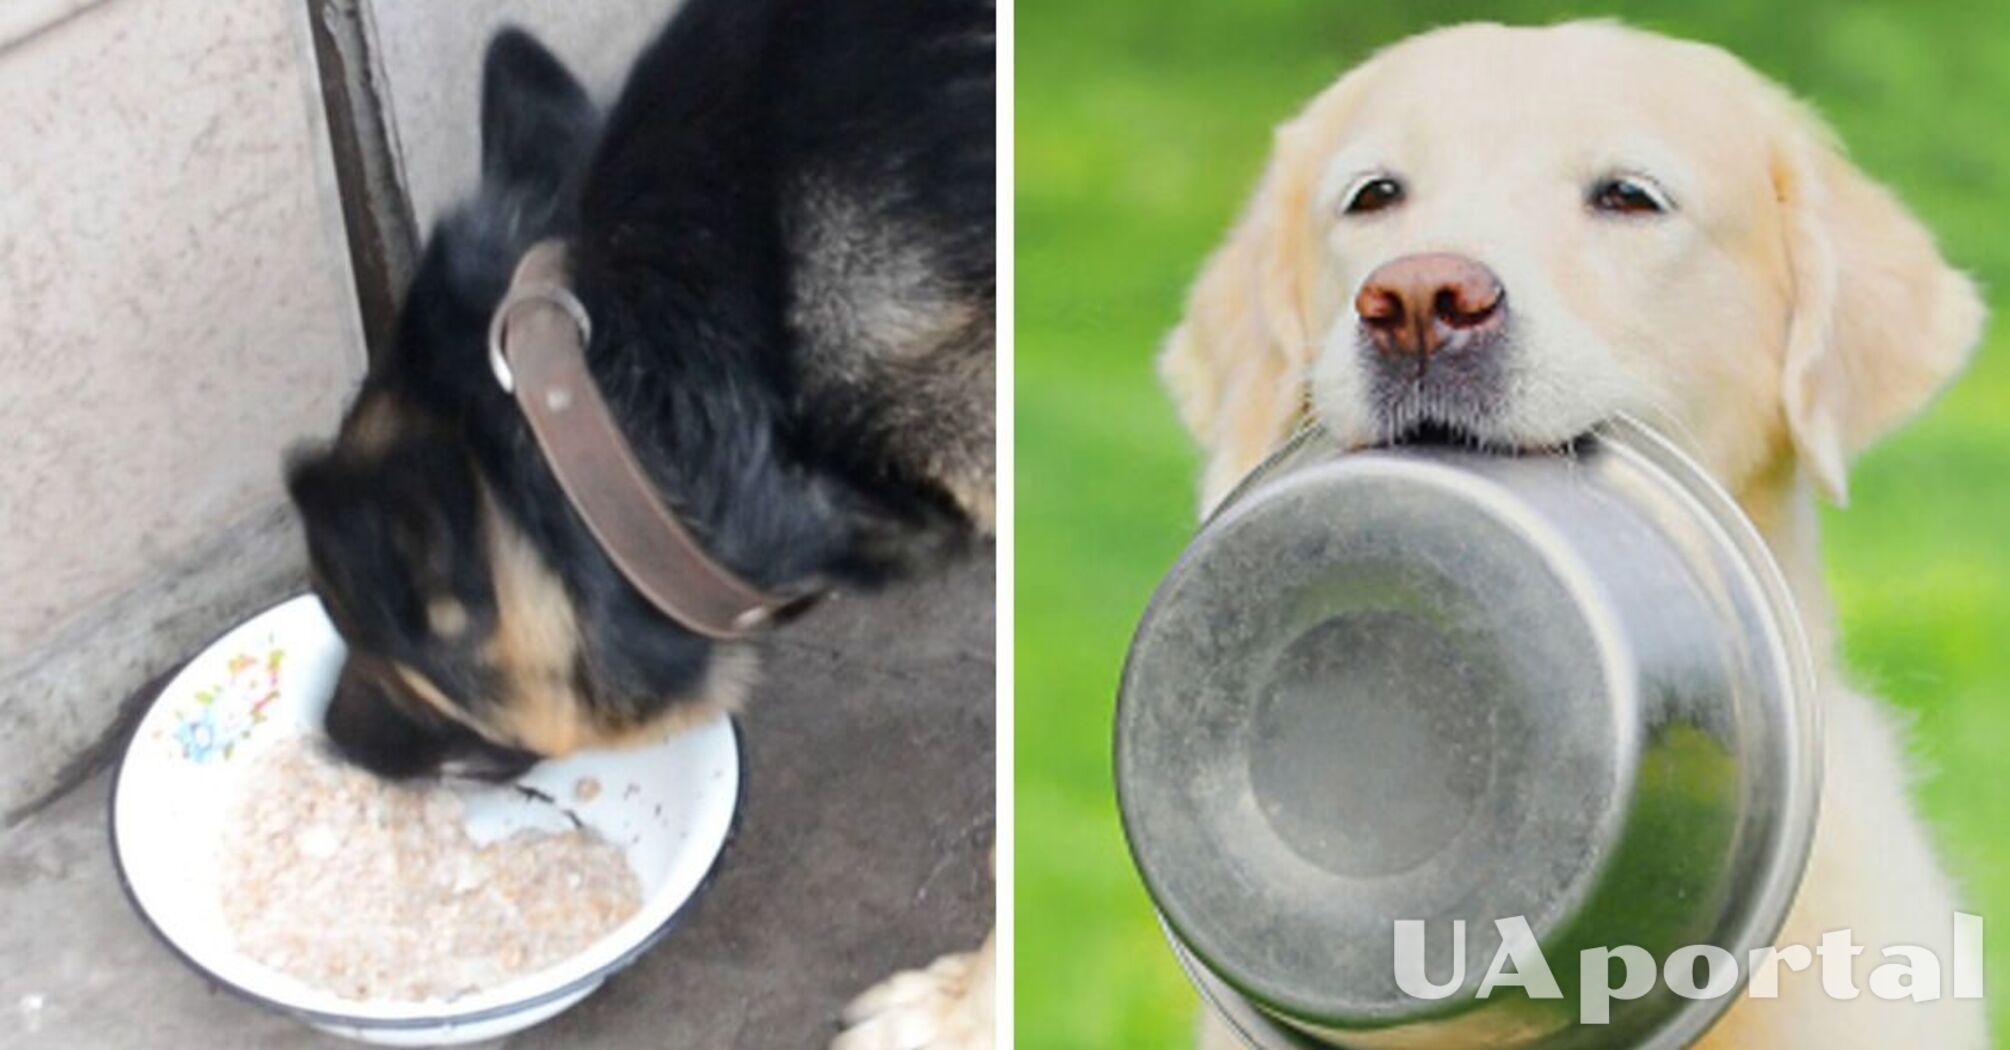 What kind of porridge can you feed a dog